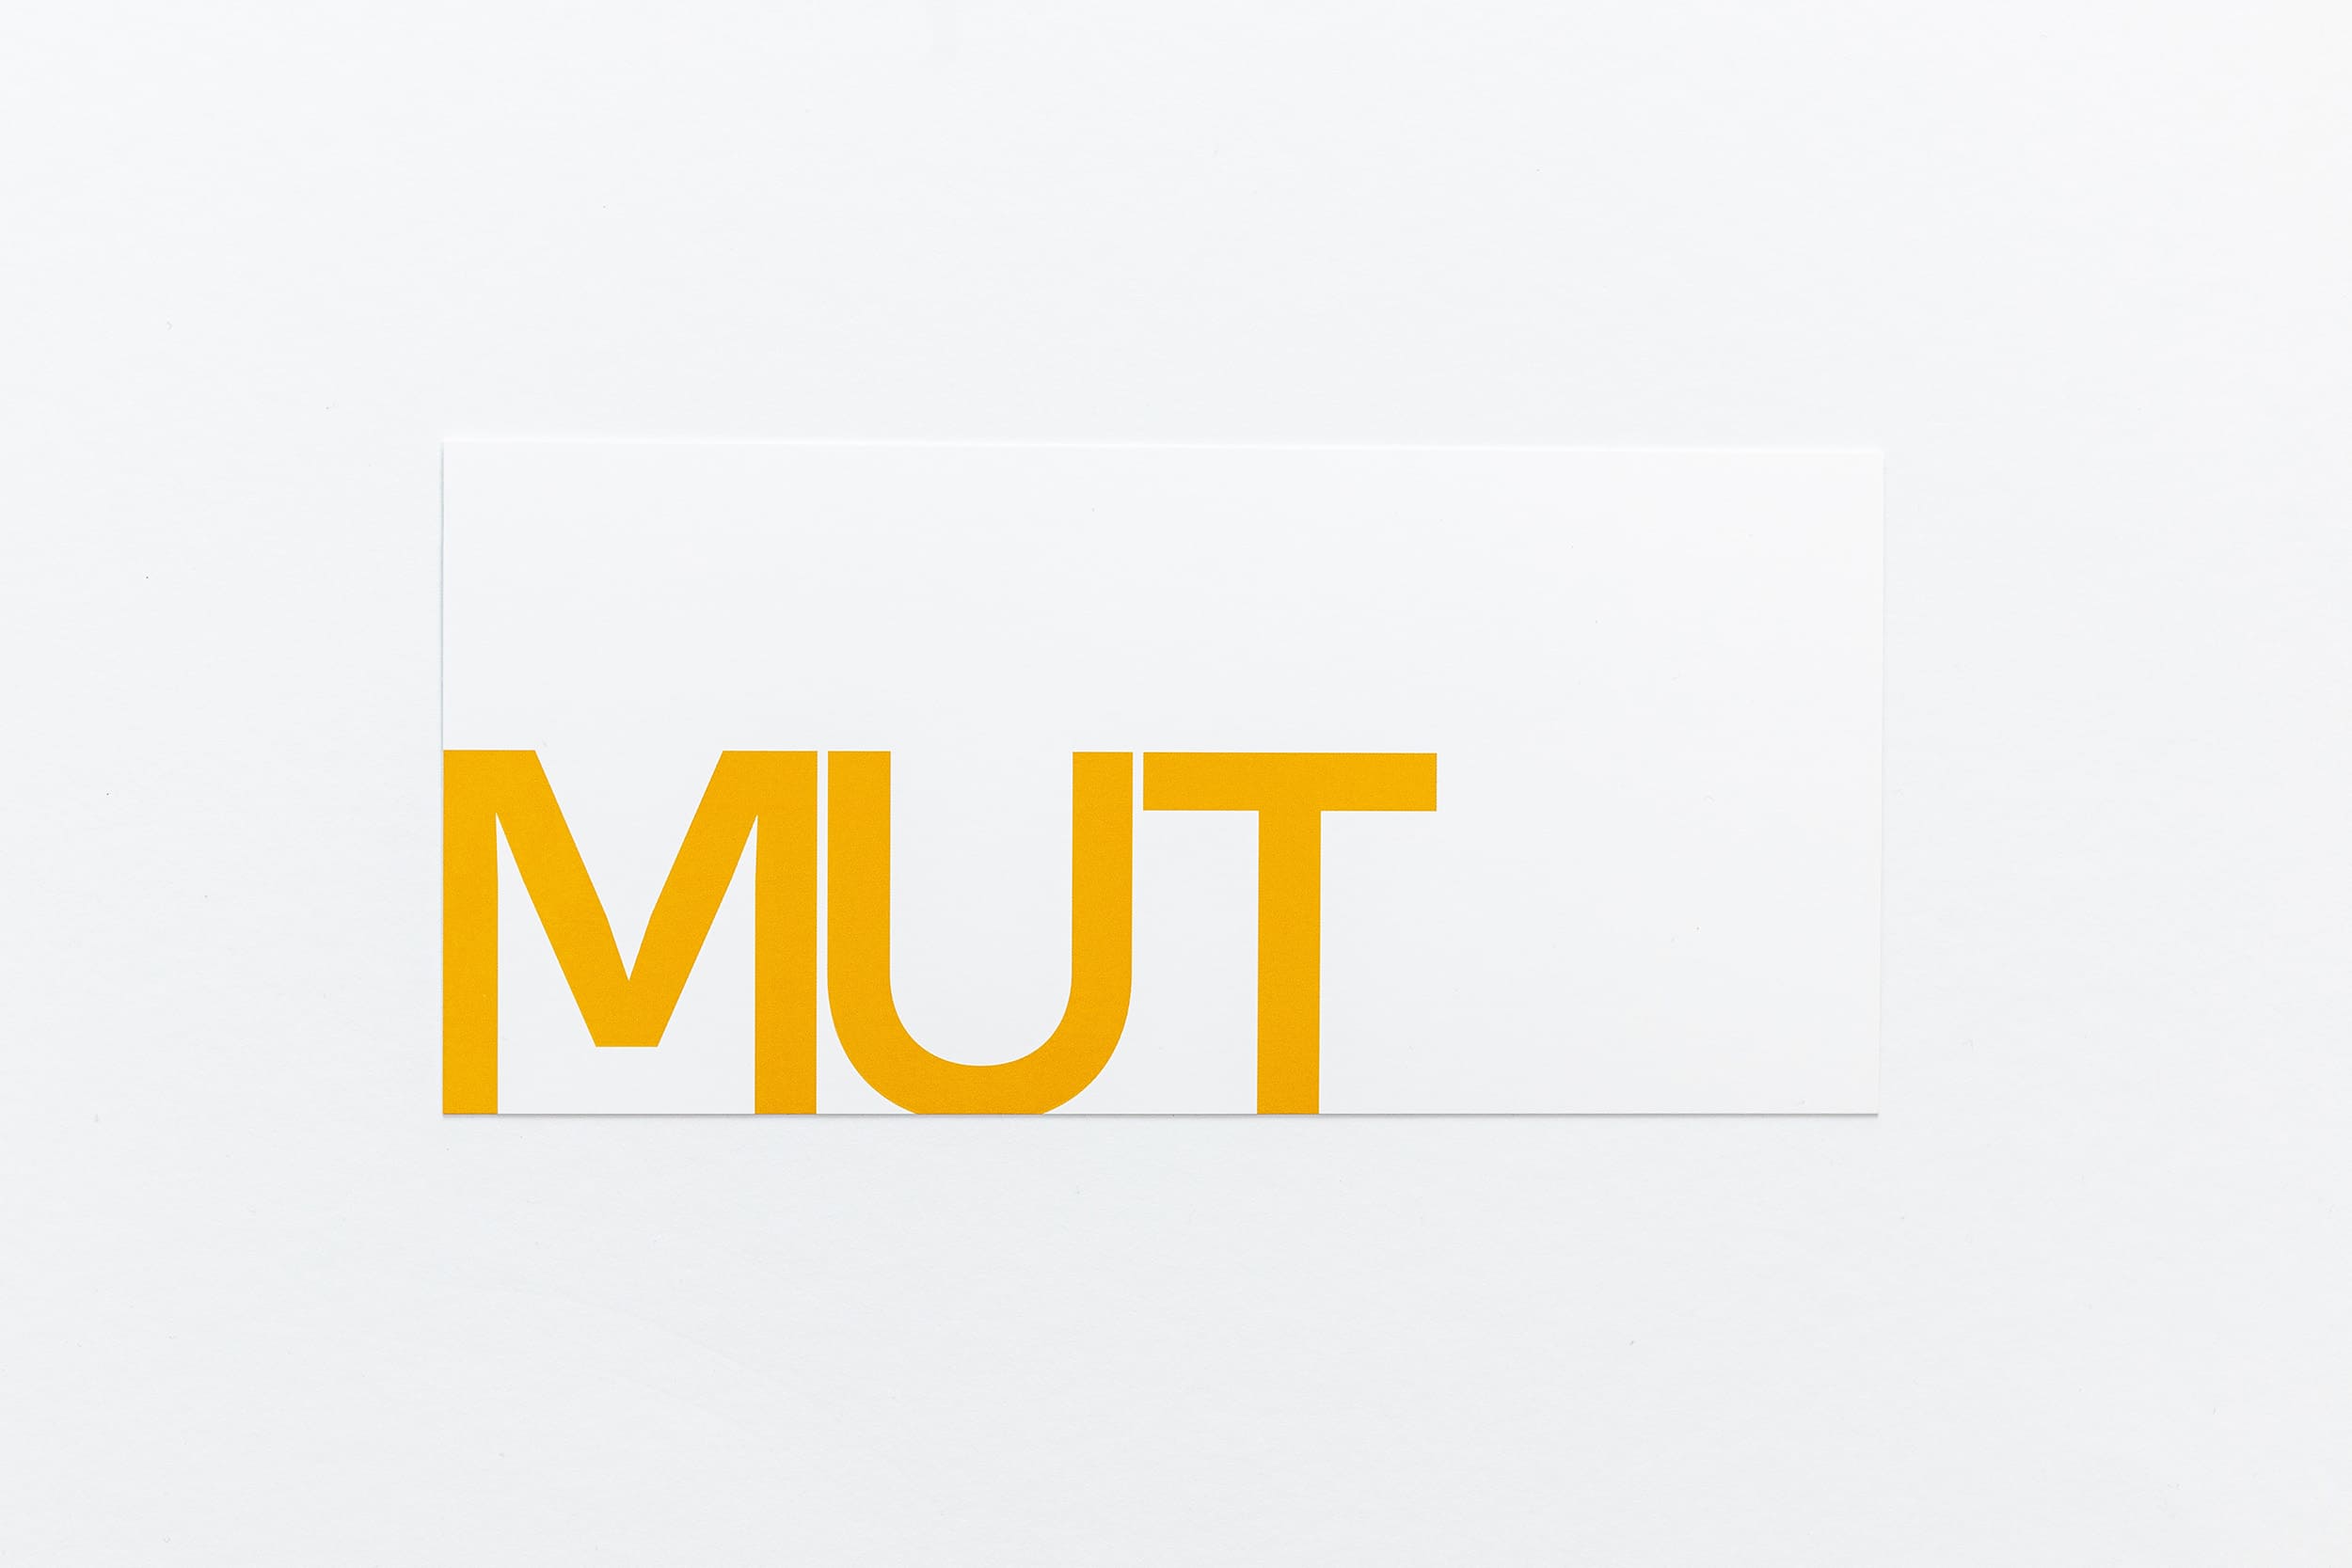 Grußkarte "MUT" als Postkarte